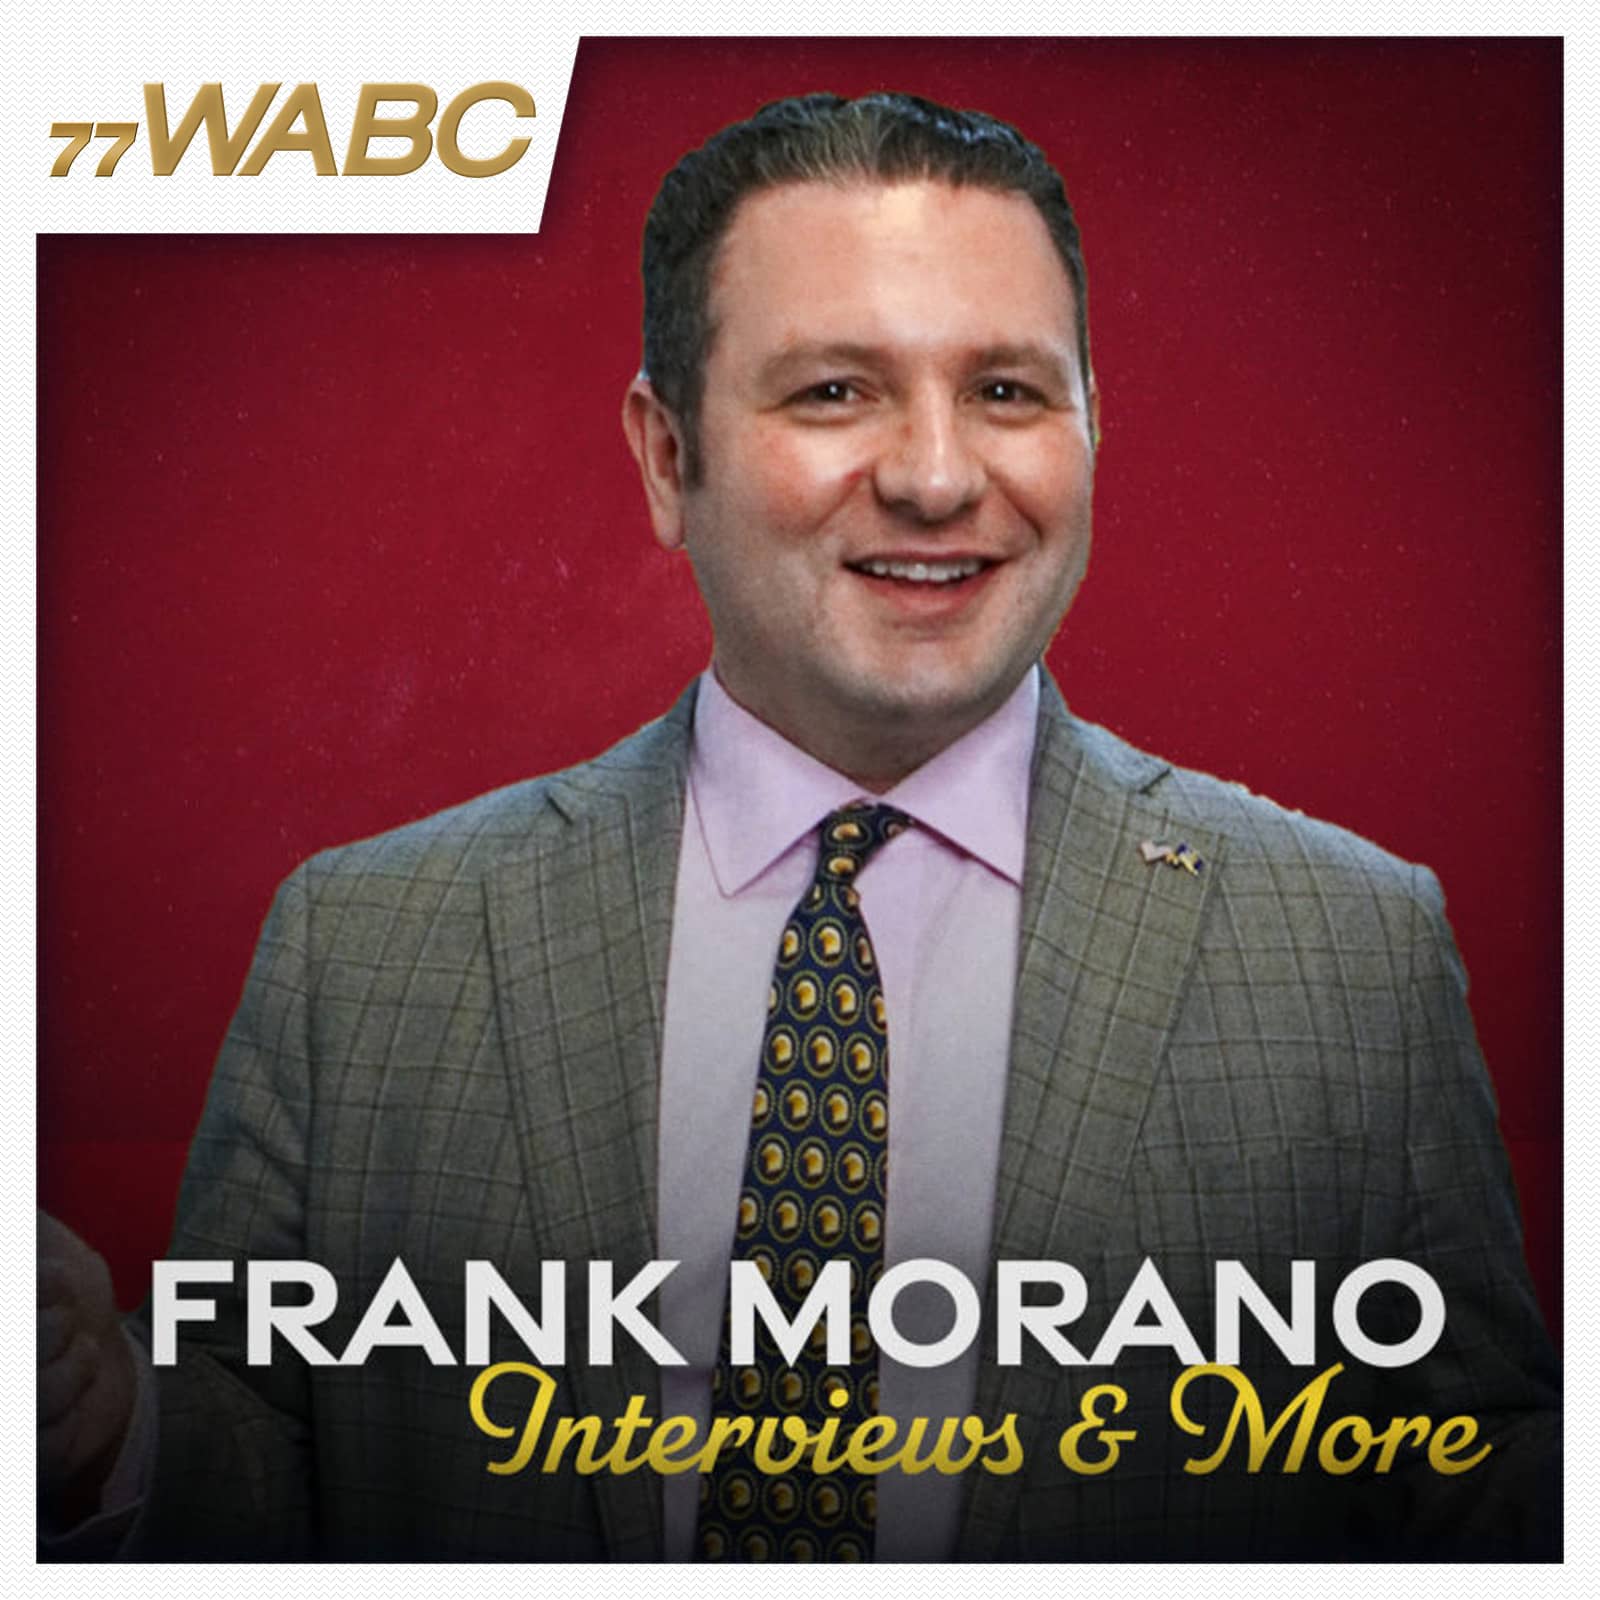 frank-morano-interviews-and-more-podcast-new-logo205442